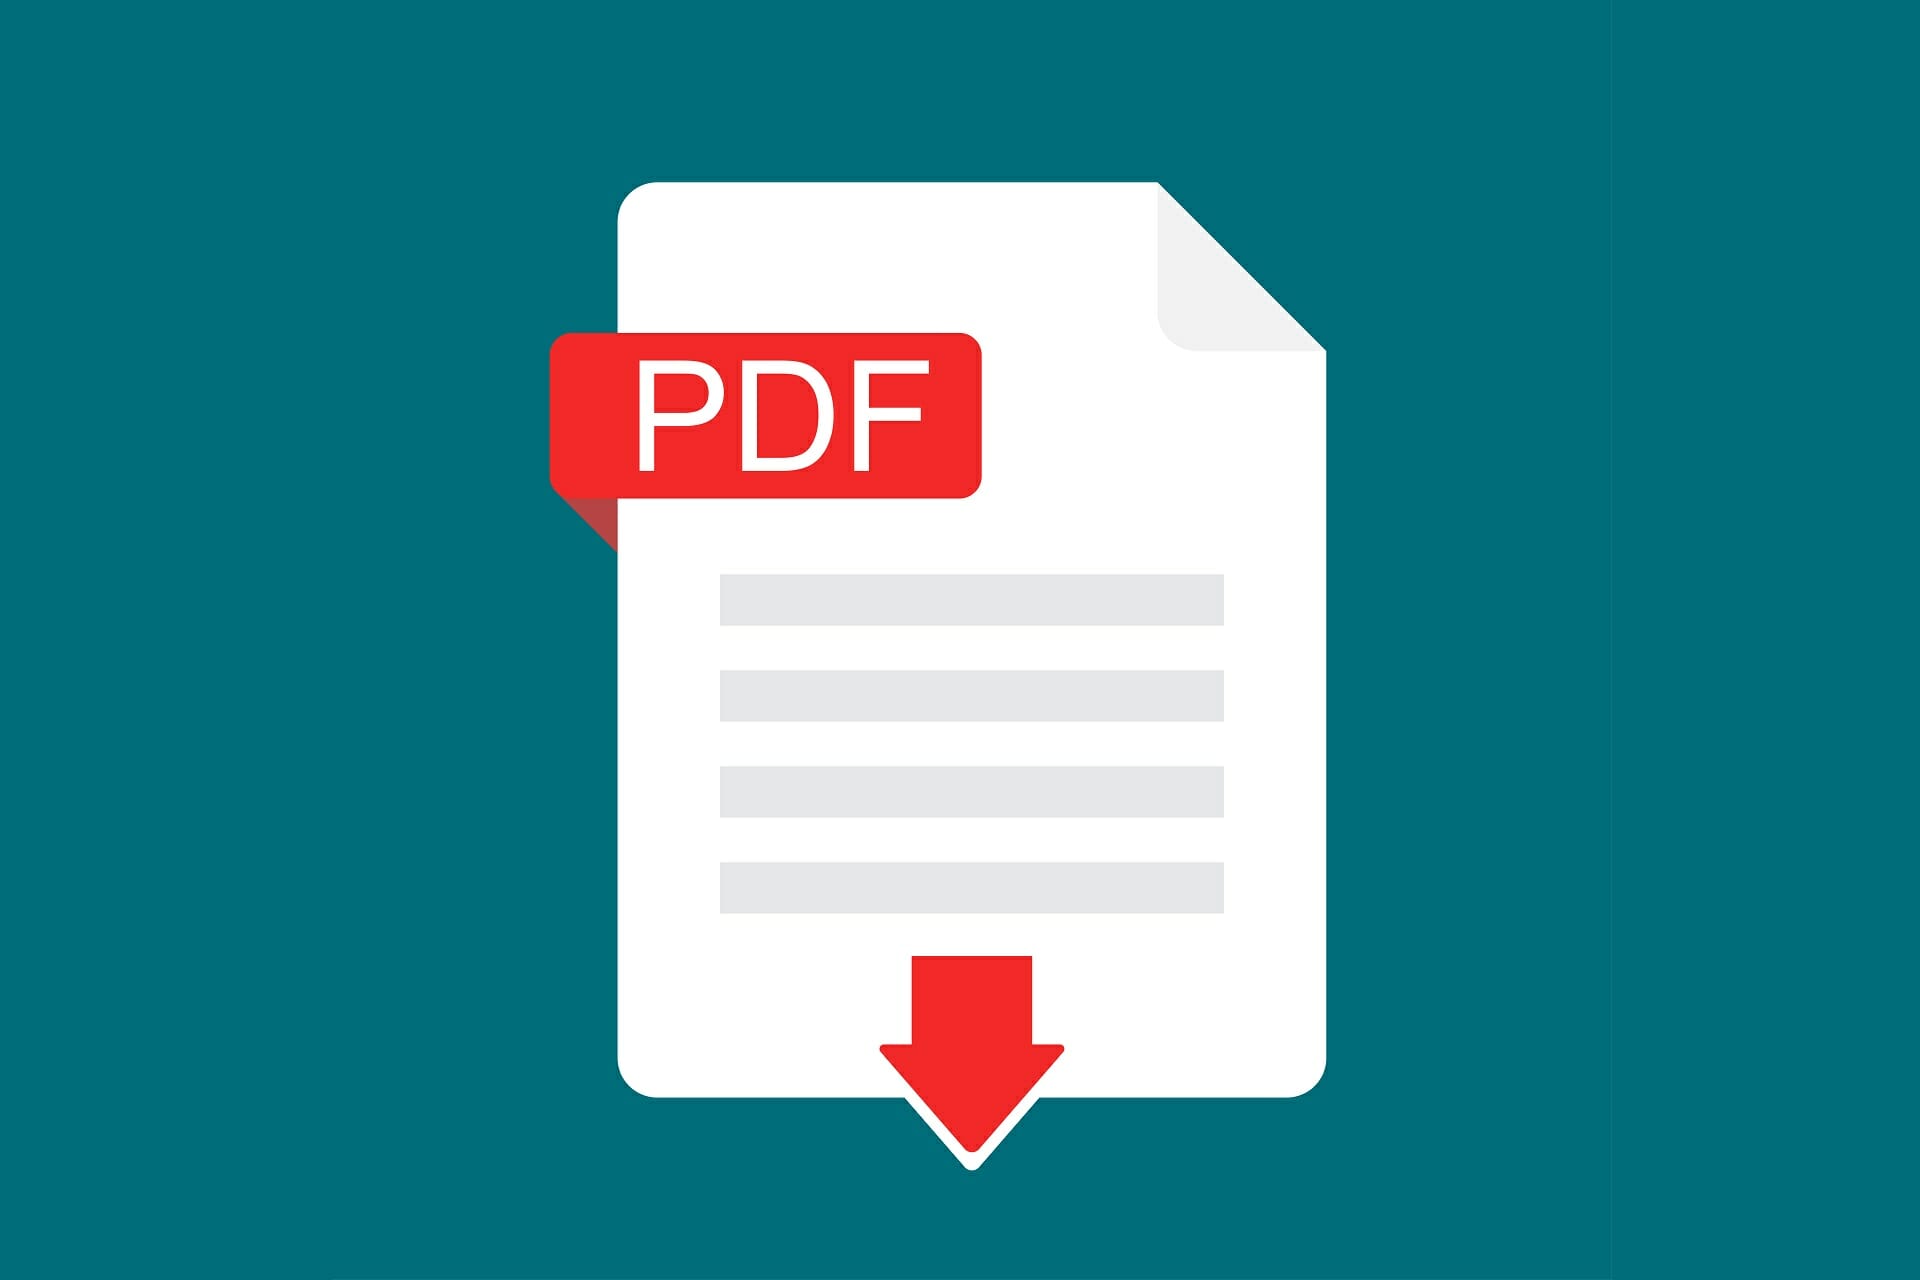 PDF reading software